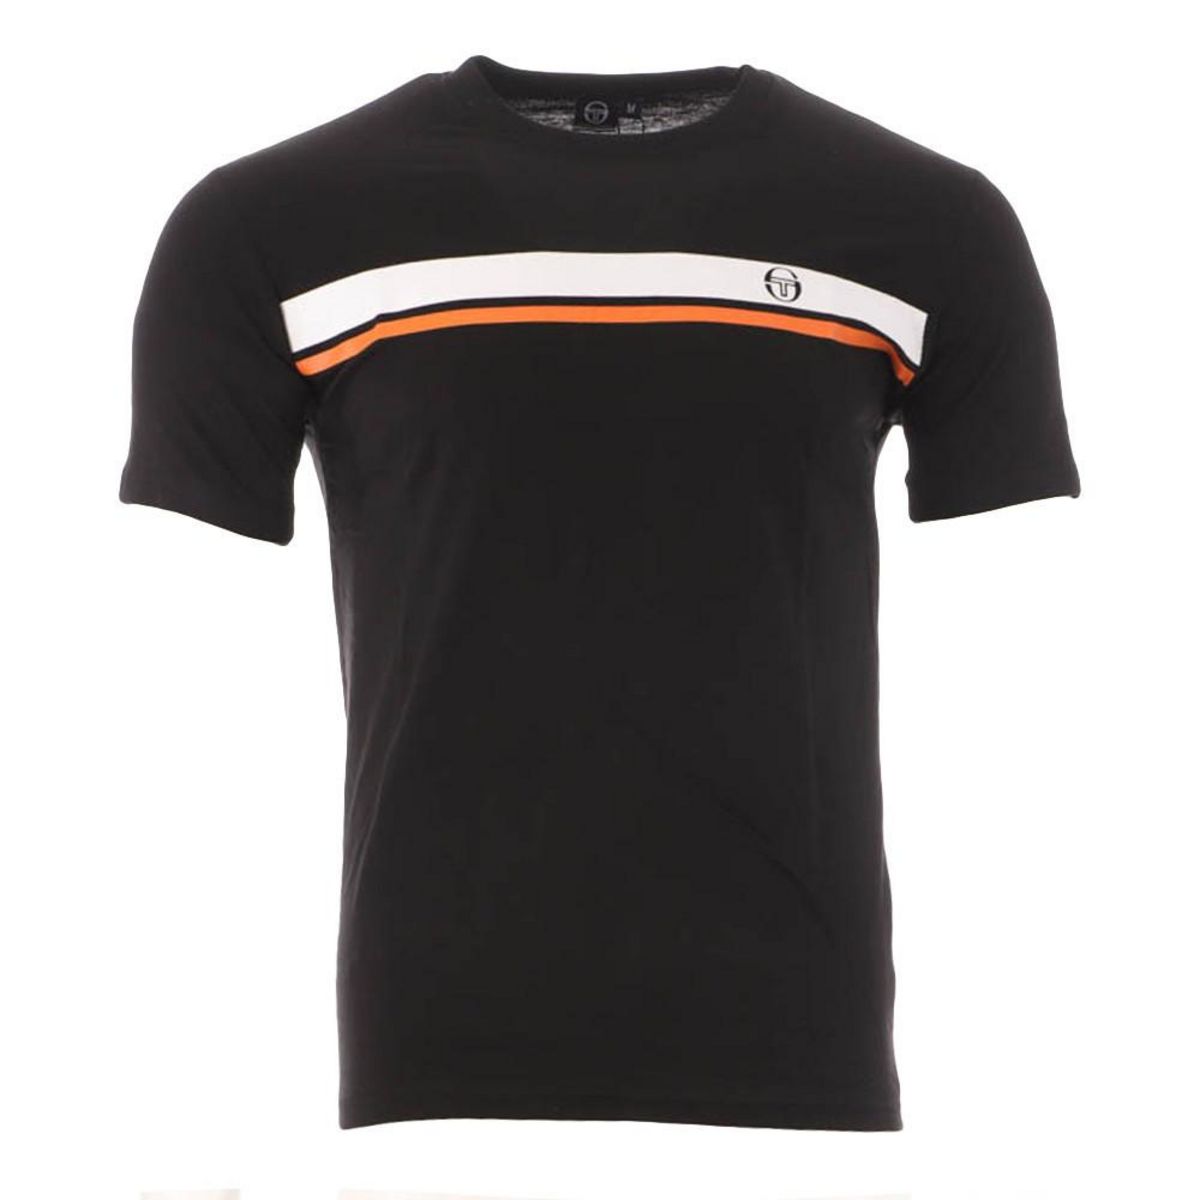 SERGIO TACCHINI T-shirt Noir/Orange Homme Sergio Tacchini Stripe A